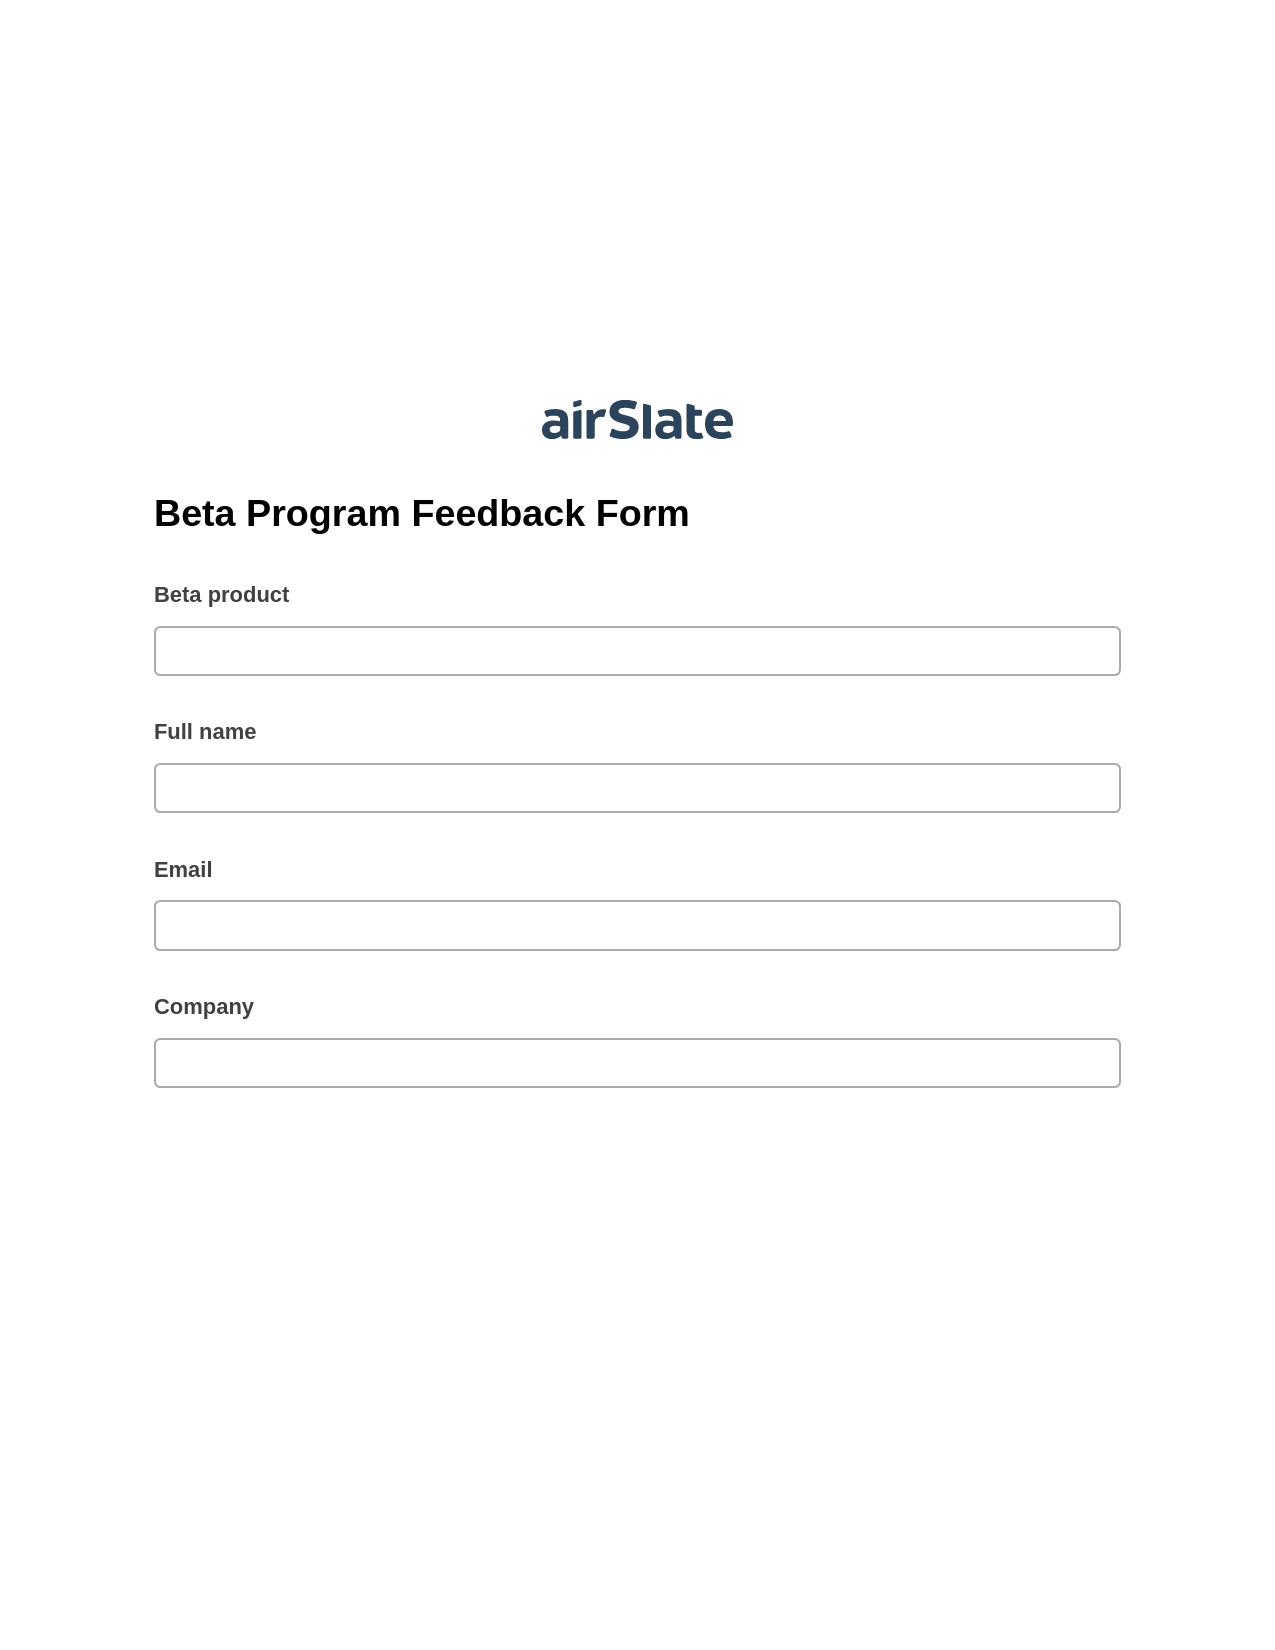 Beta Program Feedback Form Pre-fill from Salesforce Record Bot, Reminder Bot, Export to Smartsheet